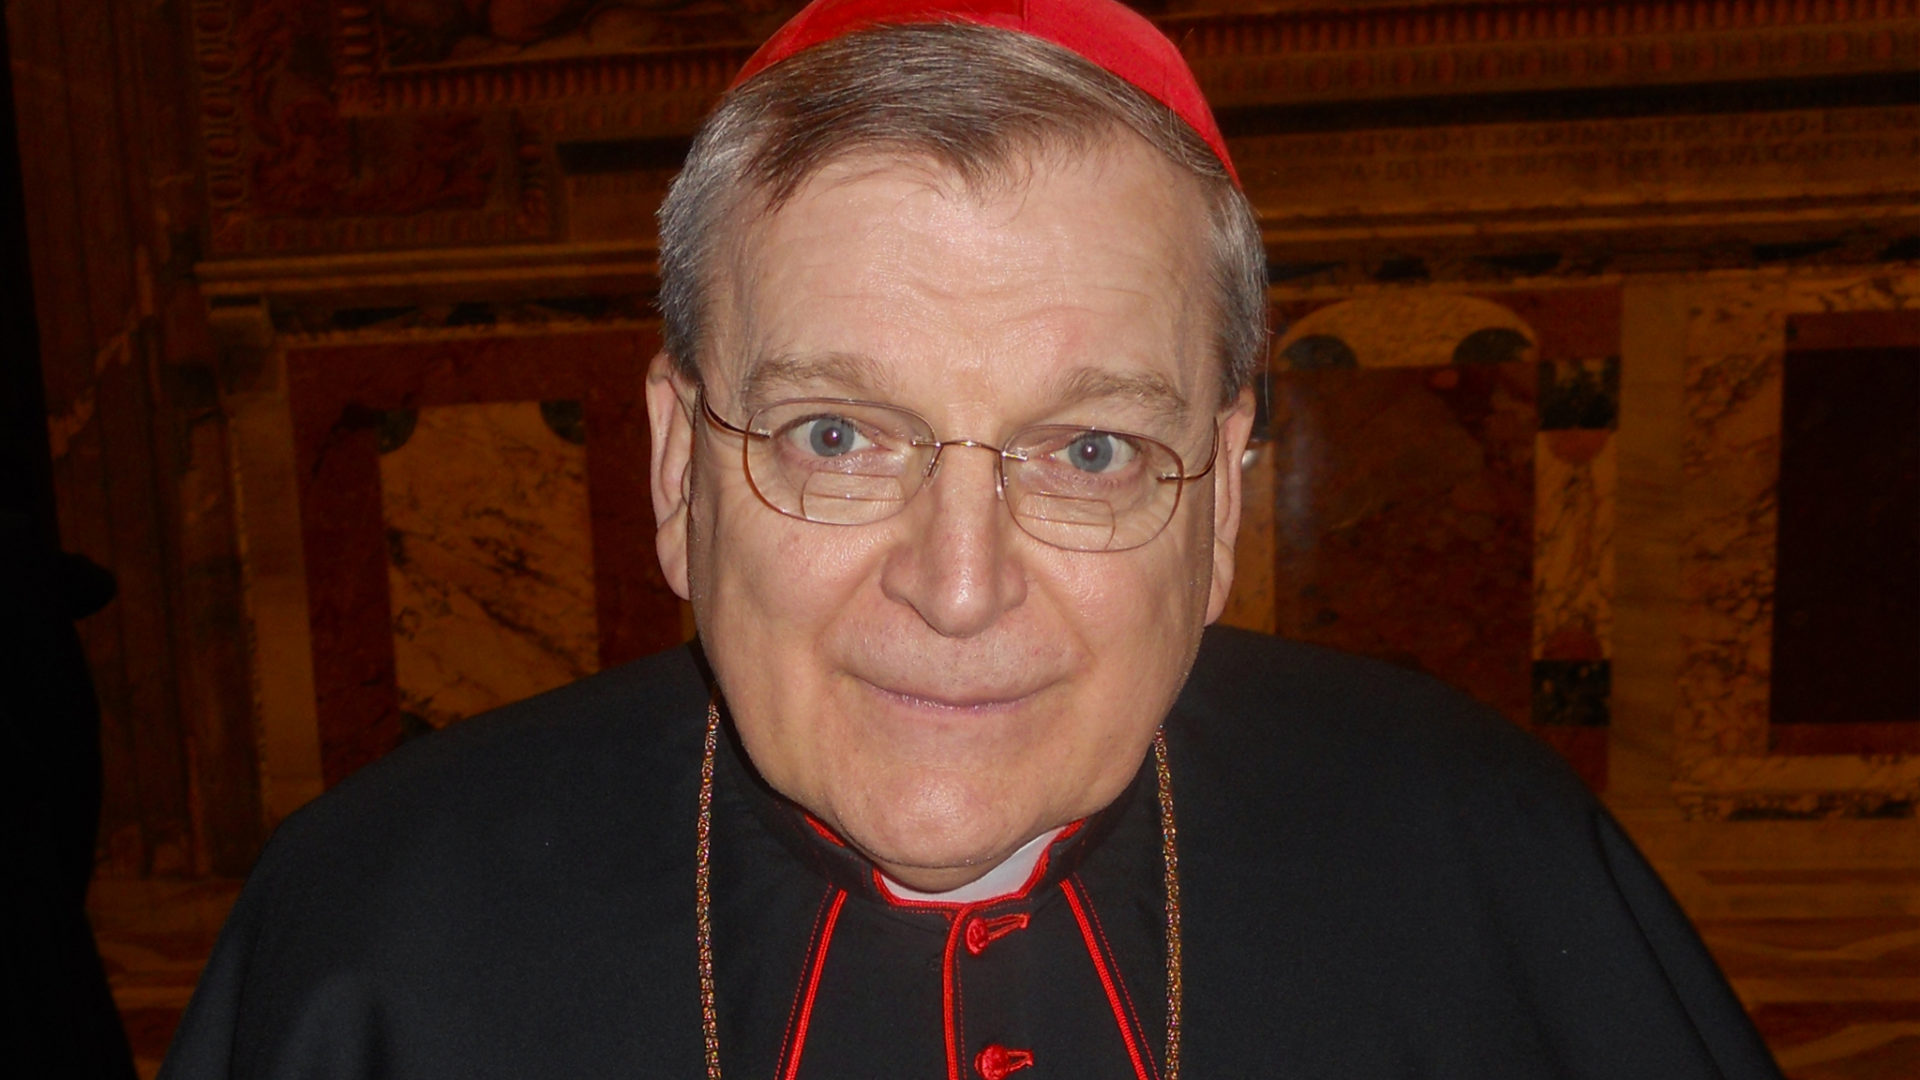 Amoris laetitia provoque "une confusion grandissante“, selon le cardinal Burke (DR)